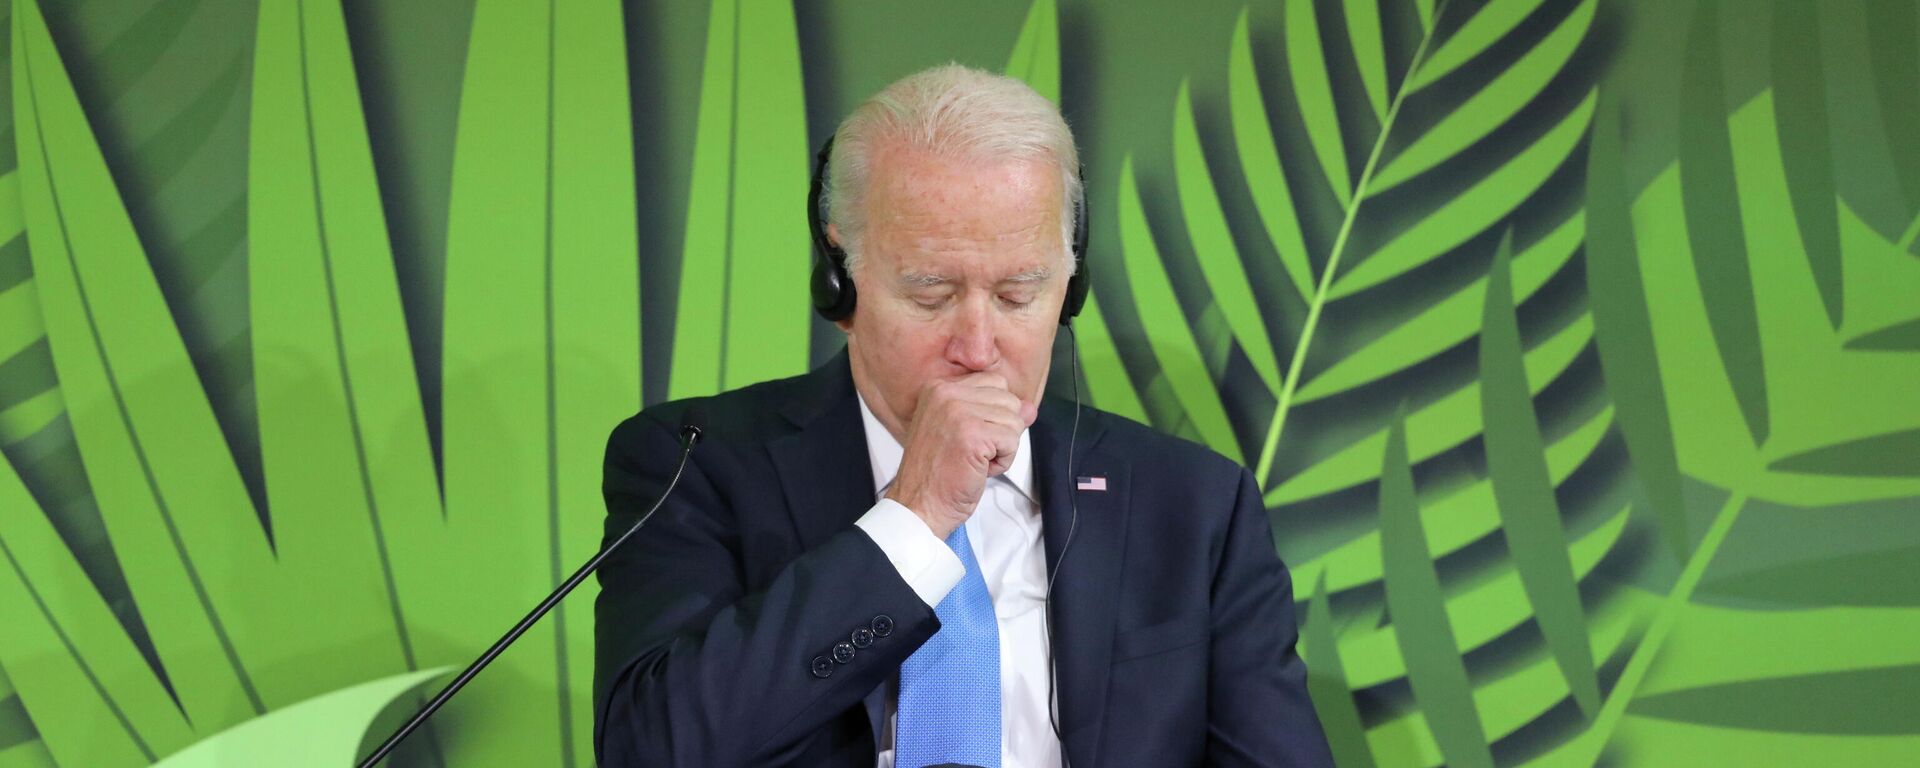 U.S. President Joe Biden attends a session during the UN Climate Change Conference (COP26) in Glasgow, Scotland, Britain, November 2, 2021 - Sputnik International, 1920, 02.11.2021